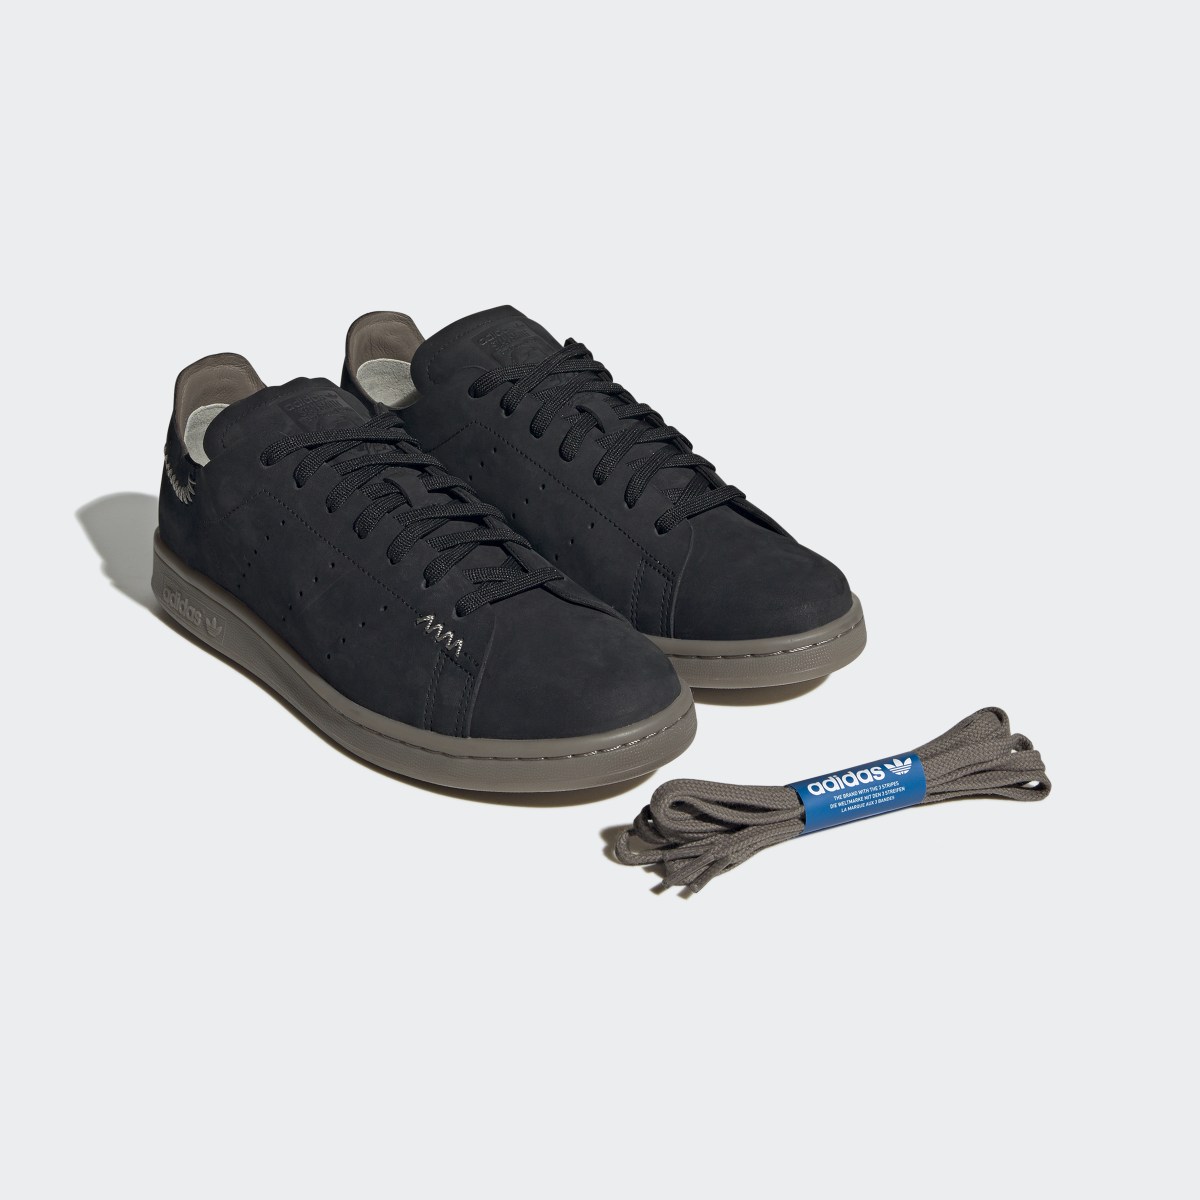 Adidas Stan Smith Recon Shoes. 10